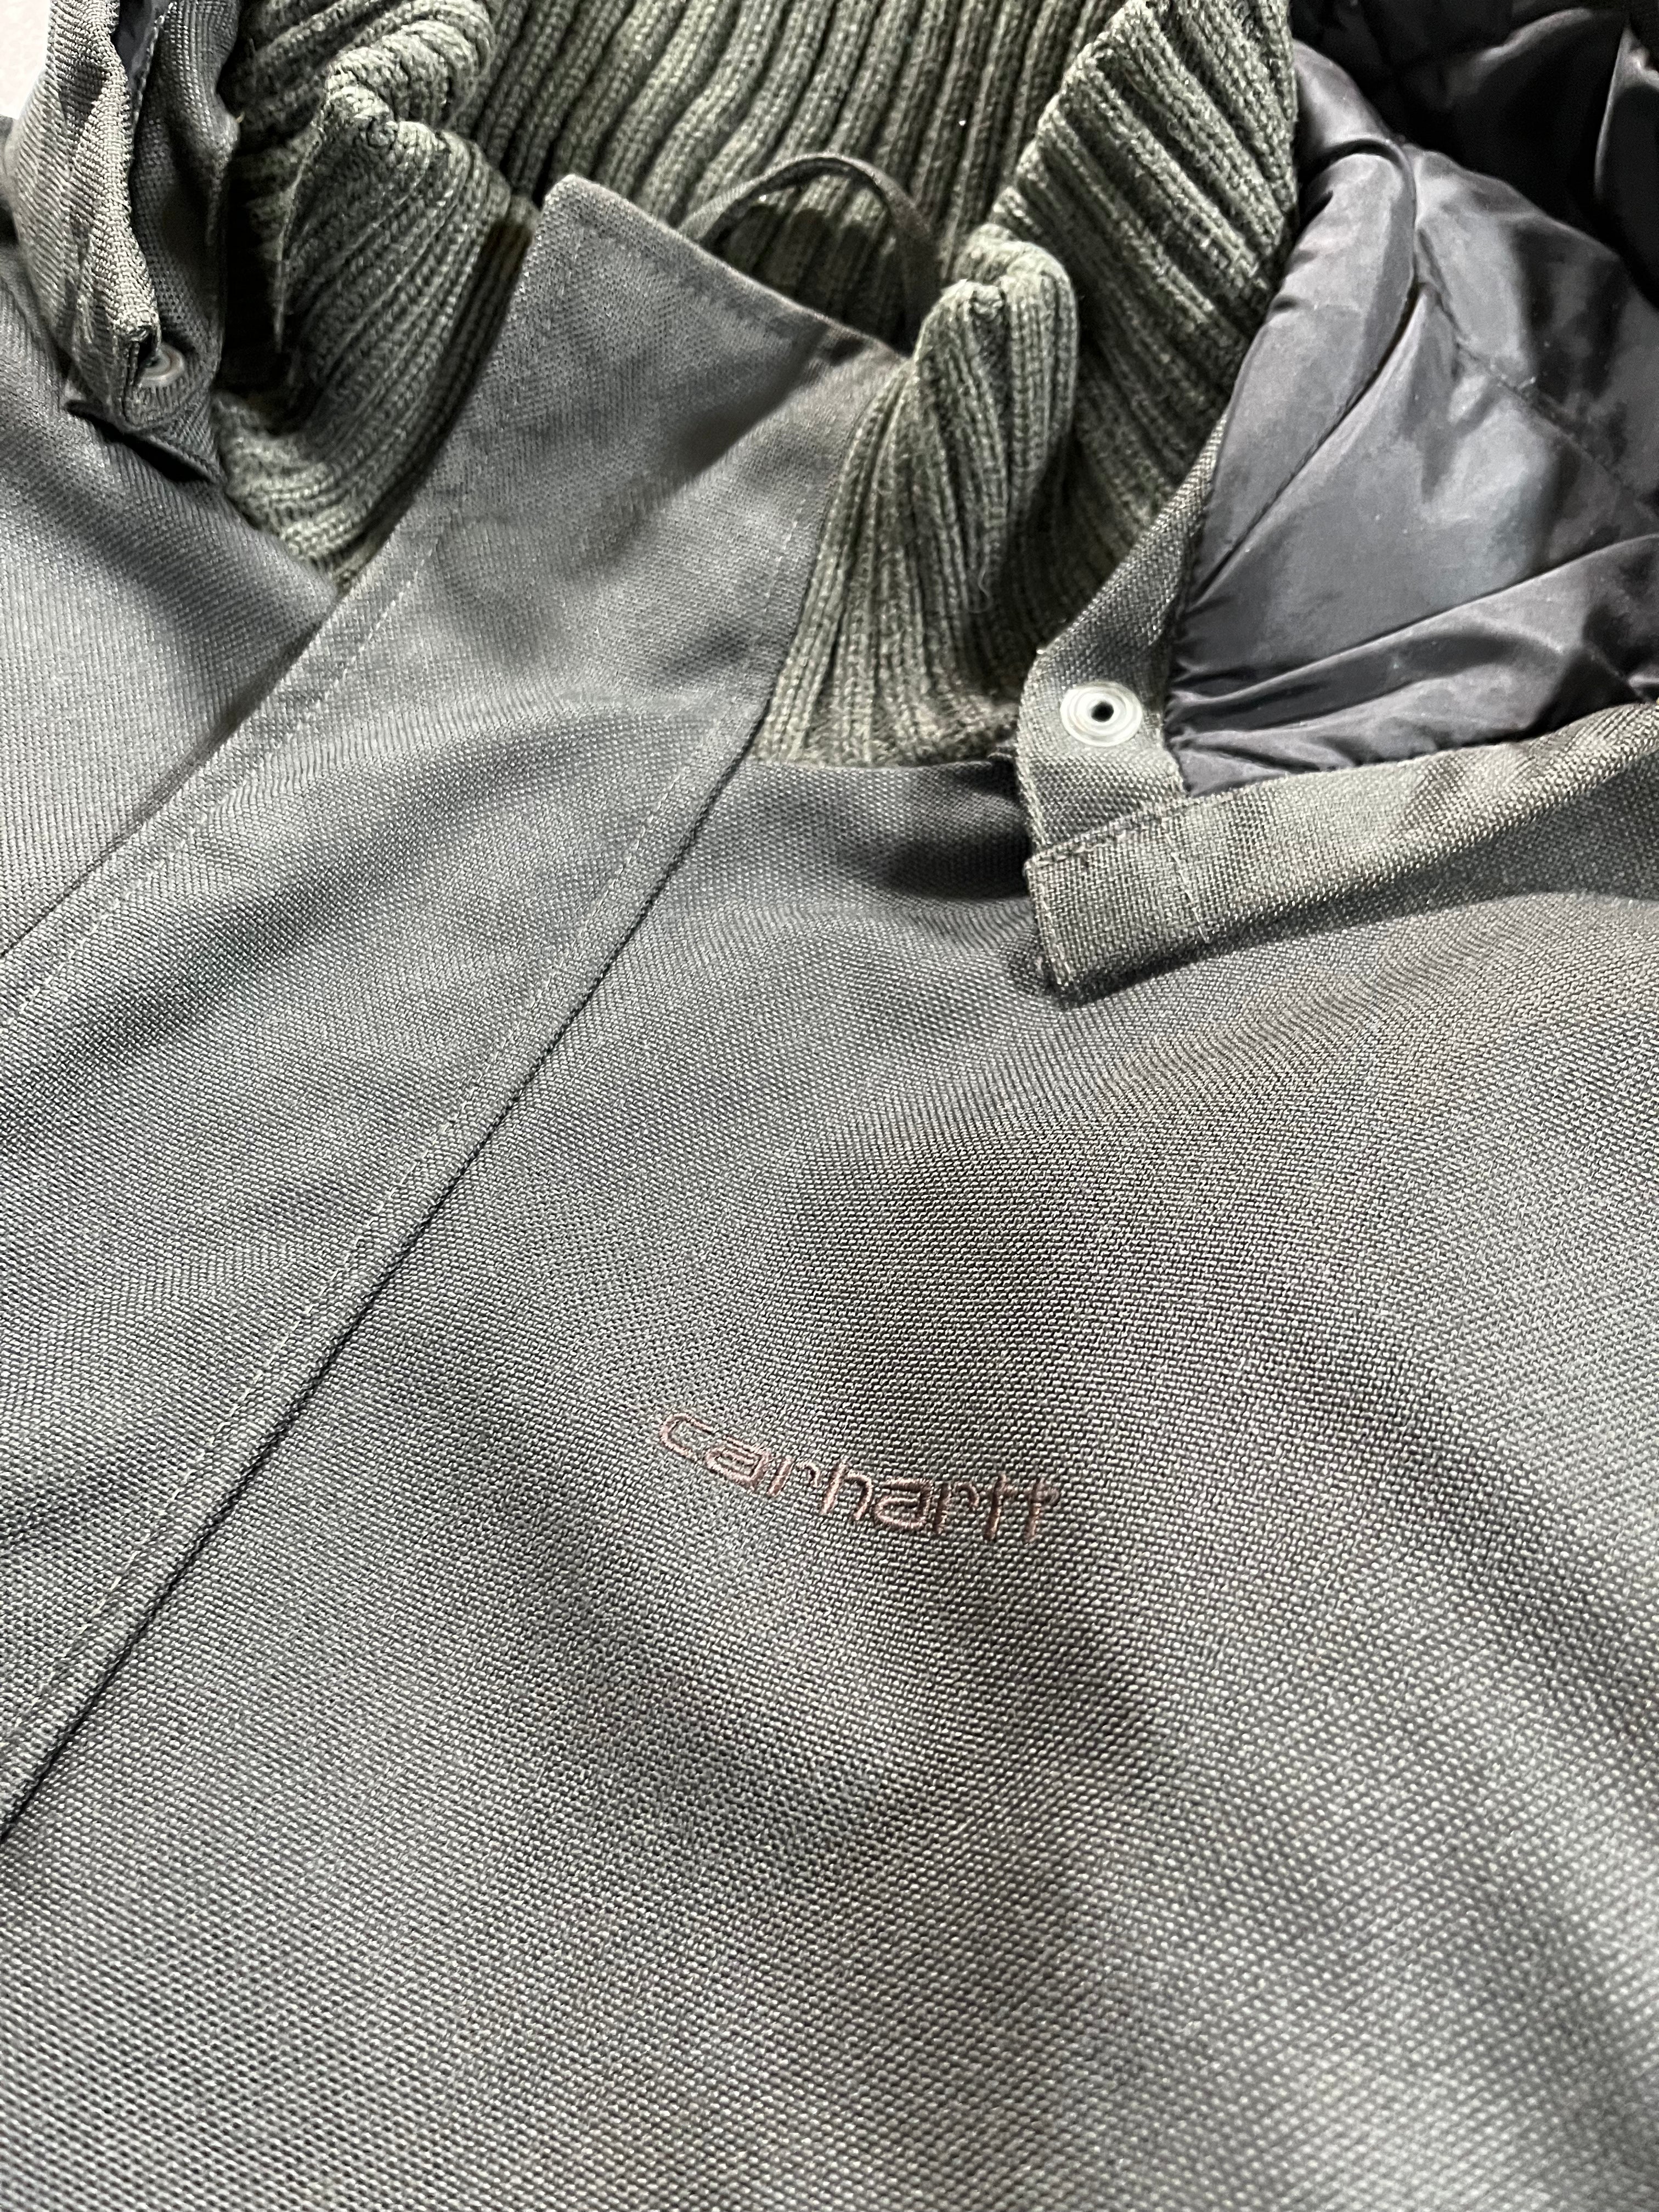 Carhartt Cordura Jacket Grey // Large - RHAGHOUSE VINTAGE